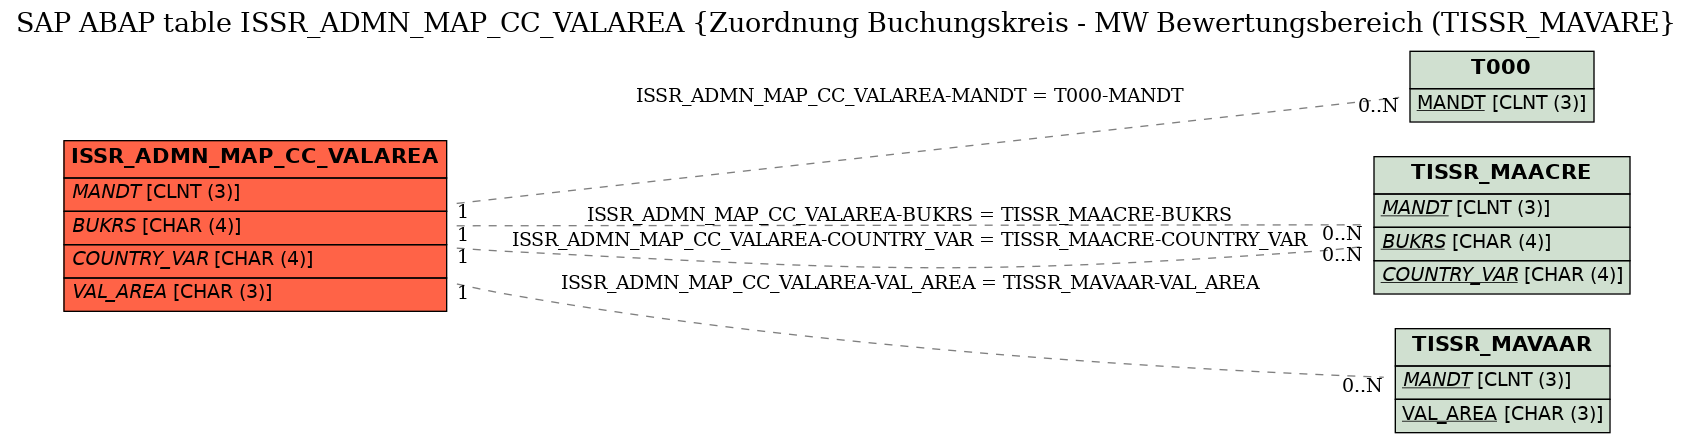 E-R Diagram for table ISSR_ADMN_MAP_CC_VALAREA (Zuordnung Buchungskreis - MW Bewertungsbereich (TISSR_MAVARE)